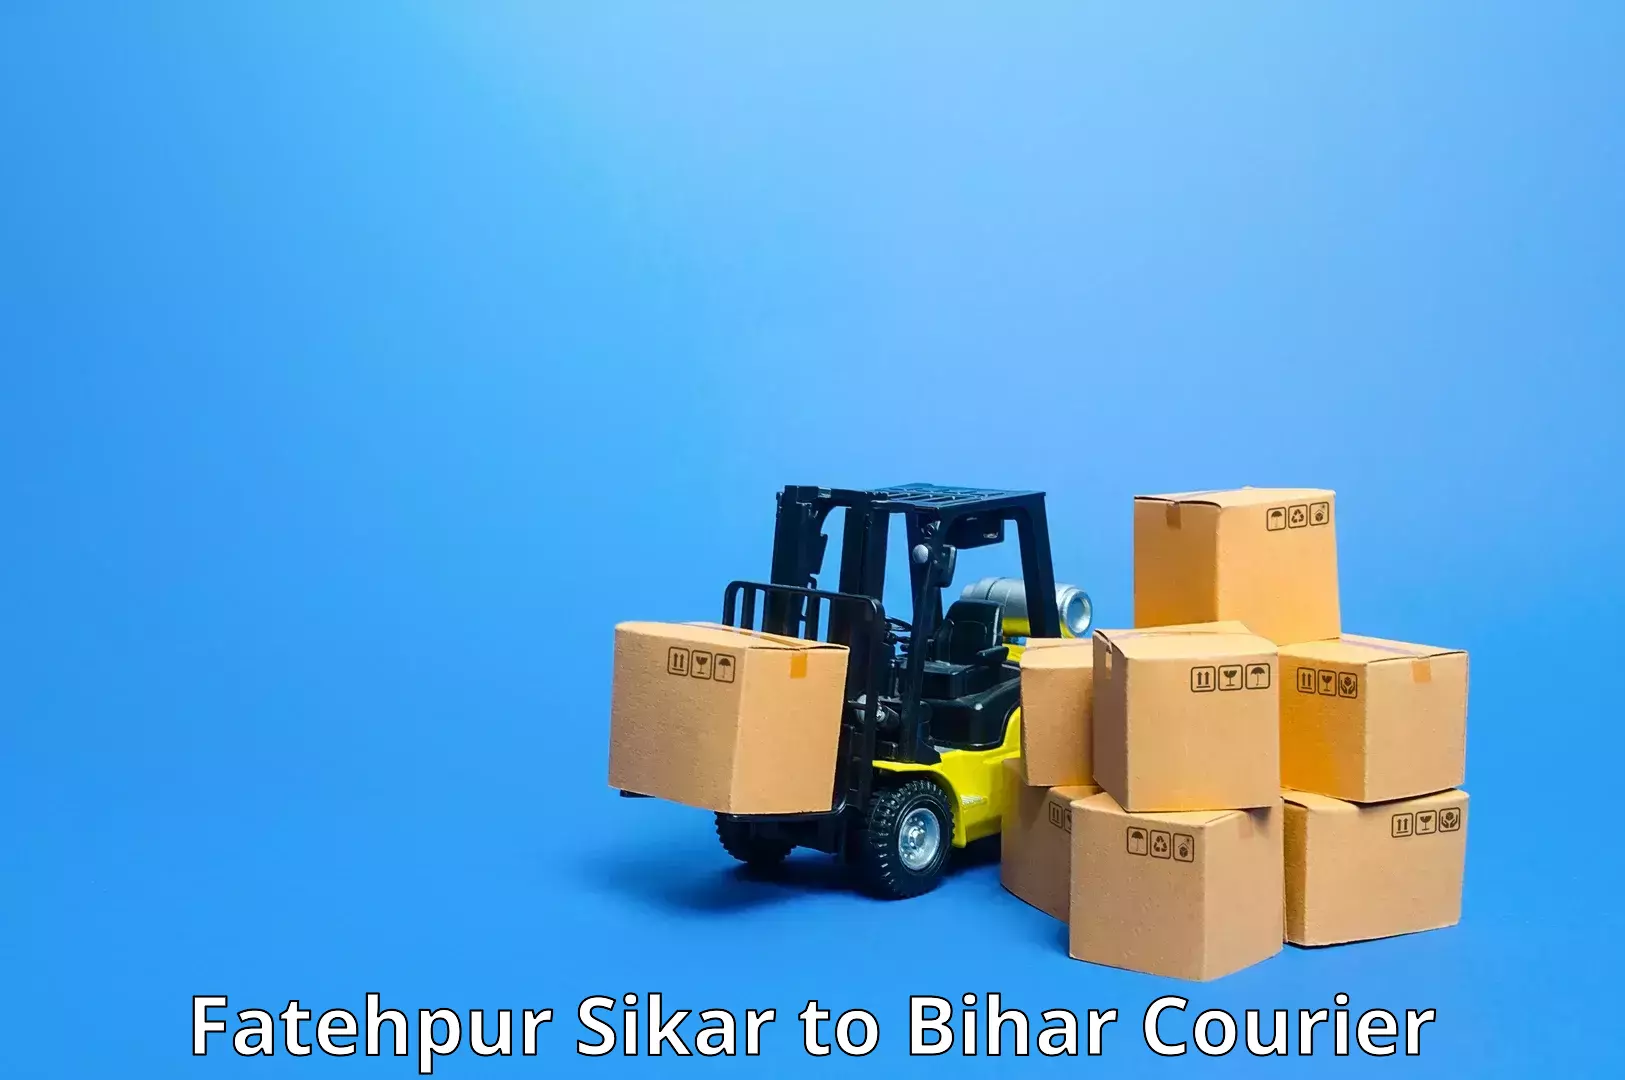 User-friendly courier app Fatehpur Sikar to Patna